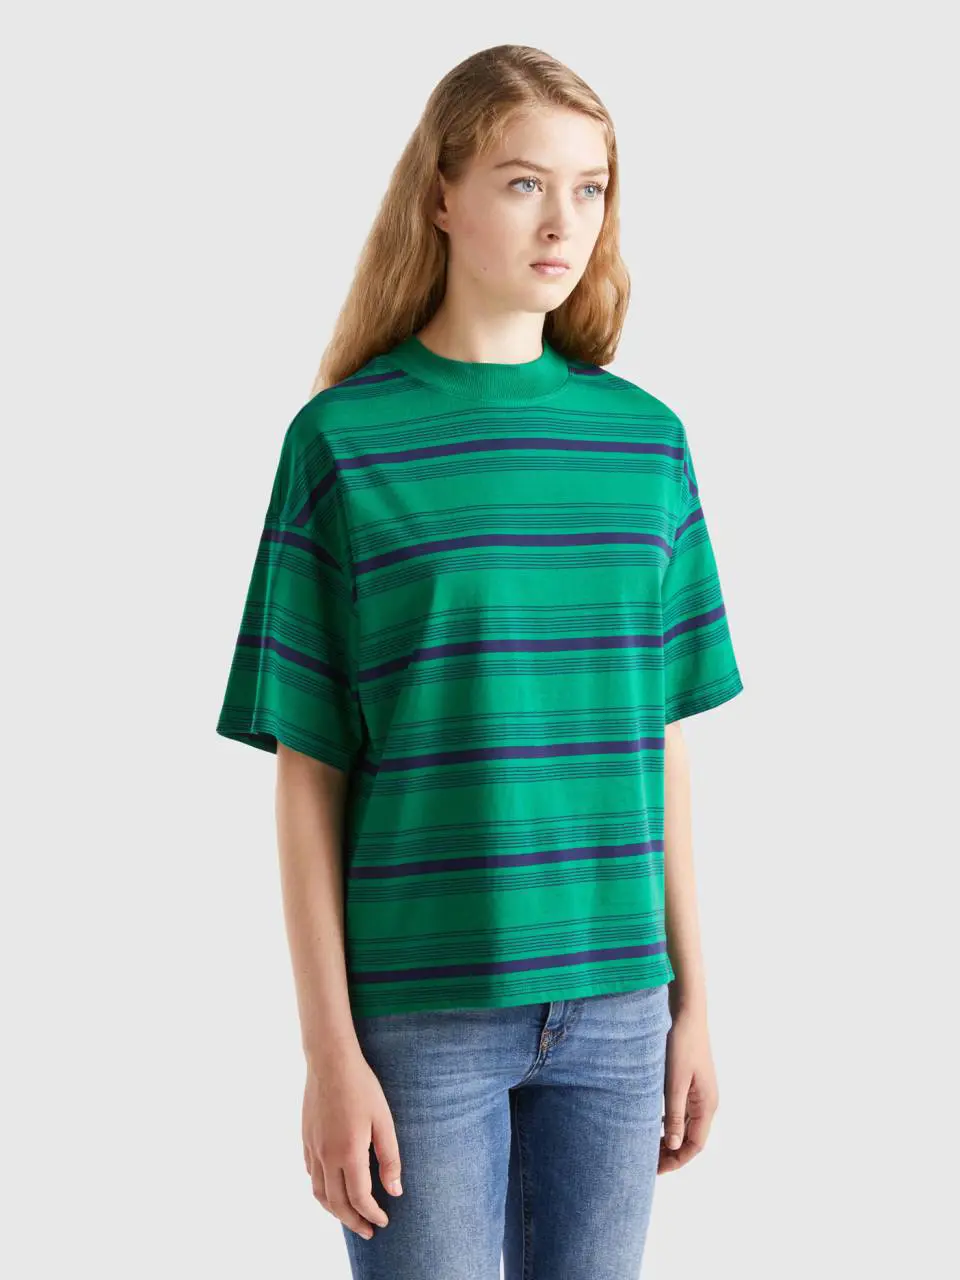 Benetton striped turtleneck t-shirt. 1